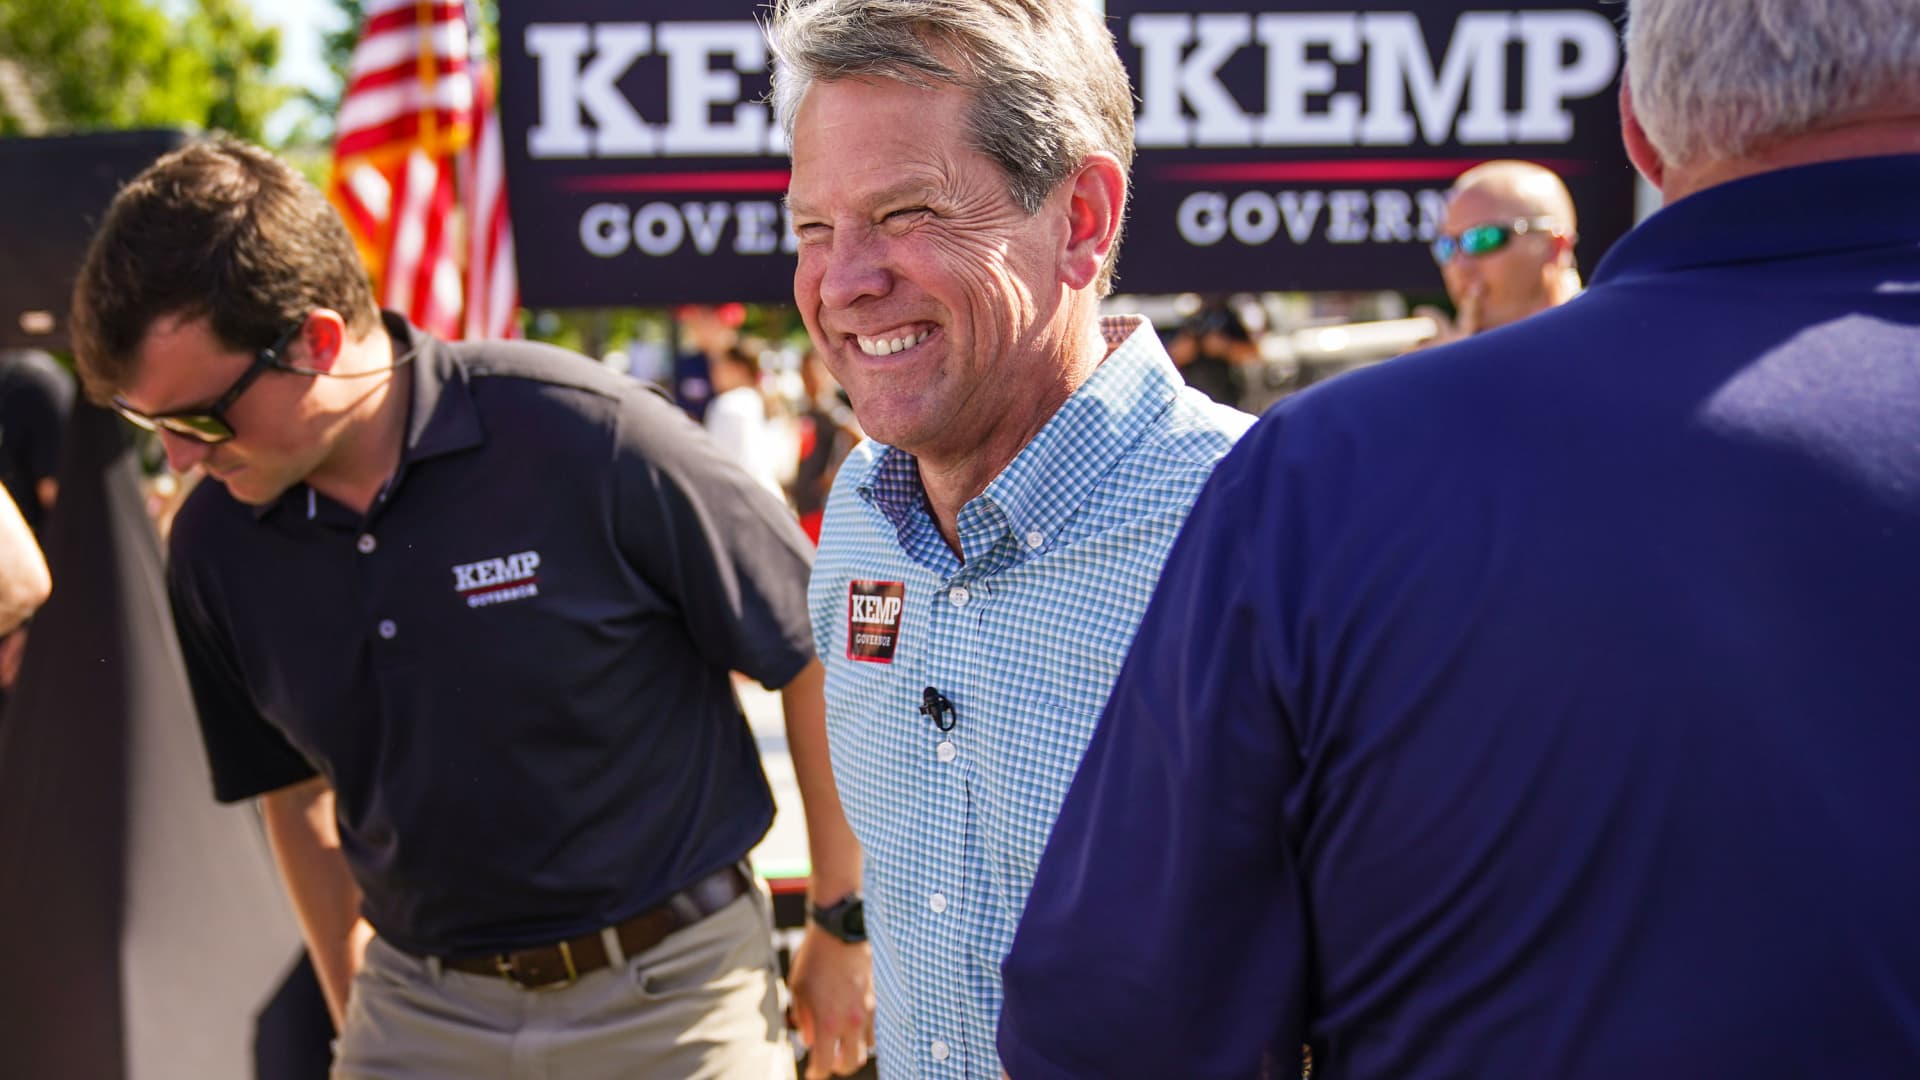 Georgia Gov. Brian Kemp beats Trump pick Perdue in GOP governor primary race, will face Democrat Abrams, NBC projects